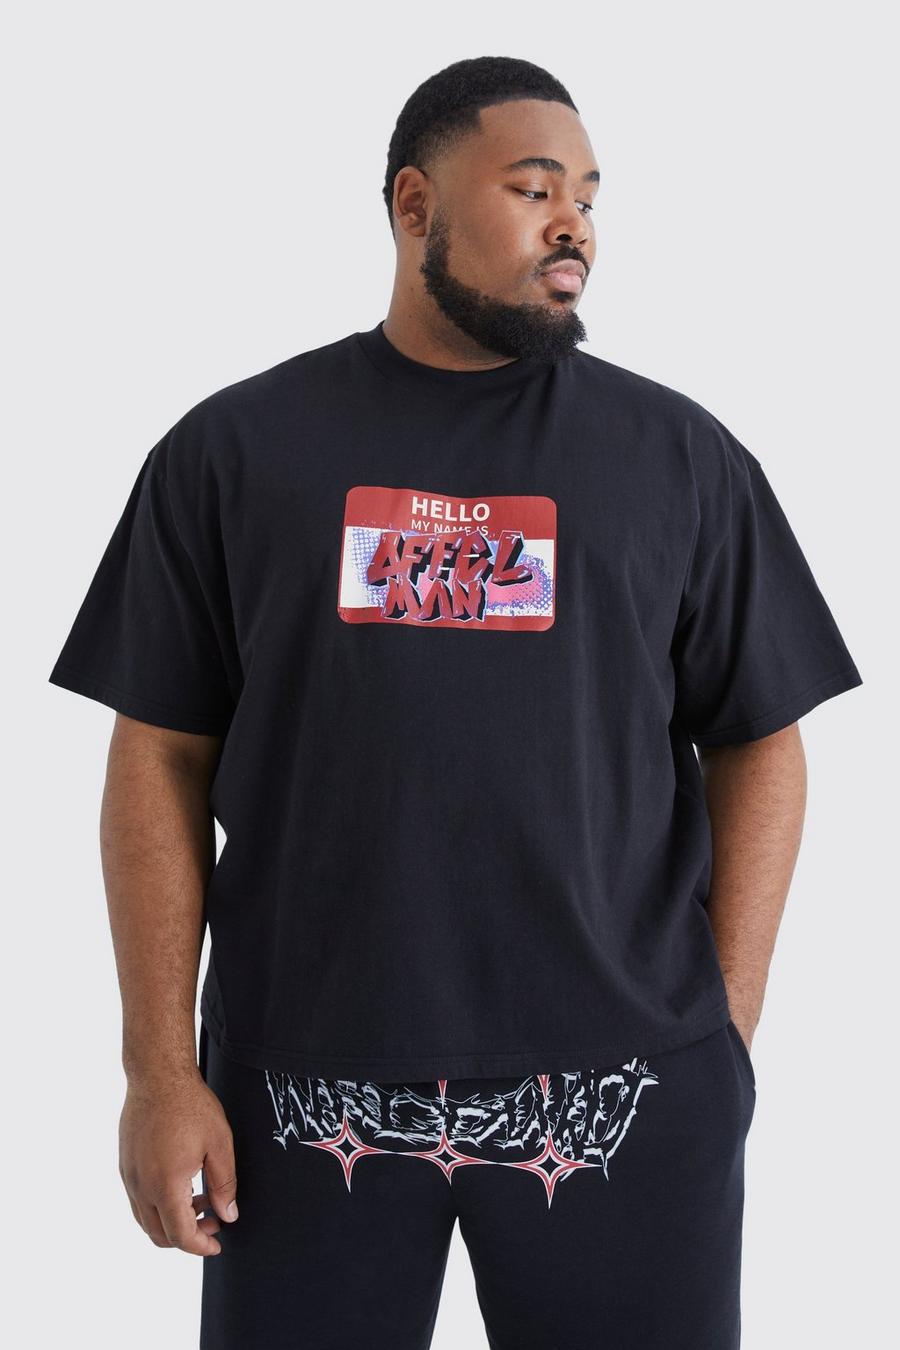 Plus kastiges Official Man T-Shirt mit Y2K Print, Black